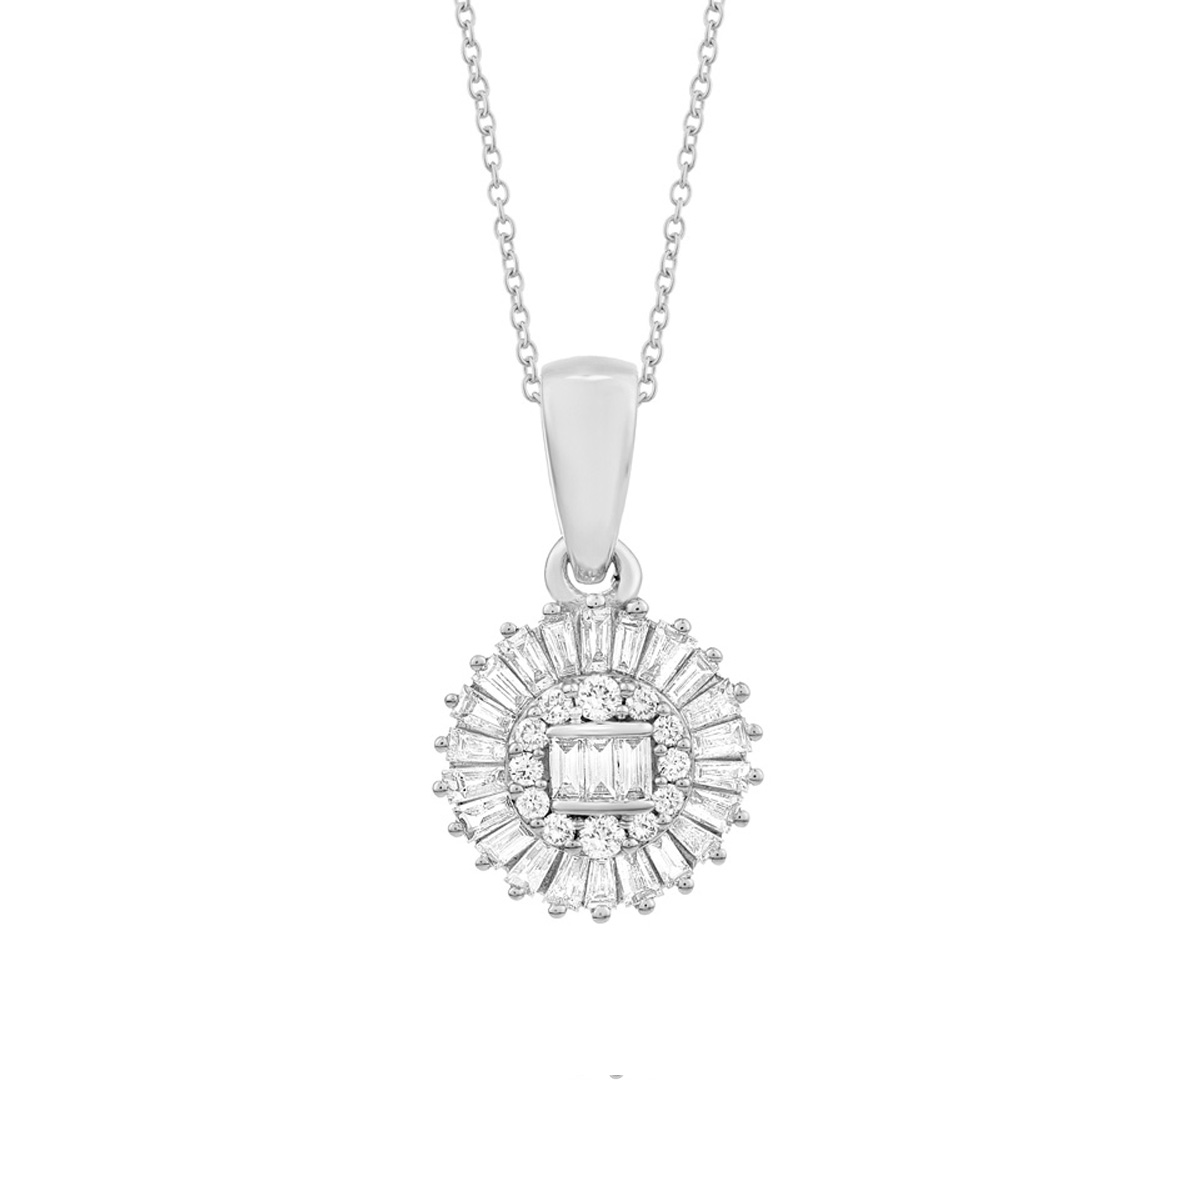 TW52689SWD4WN
14K White gold baguette diamond pendant